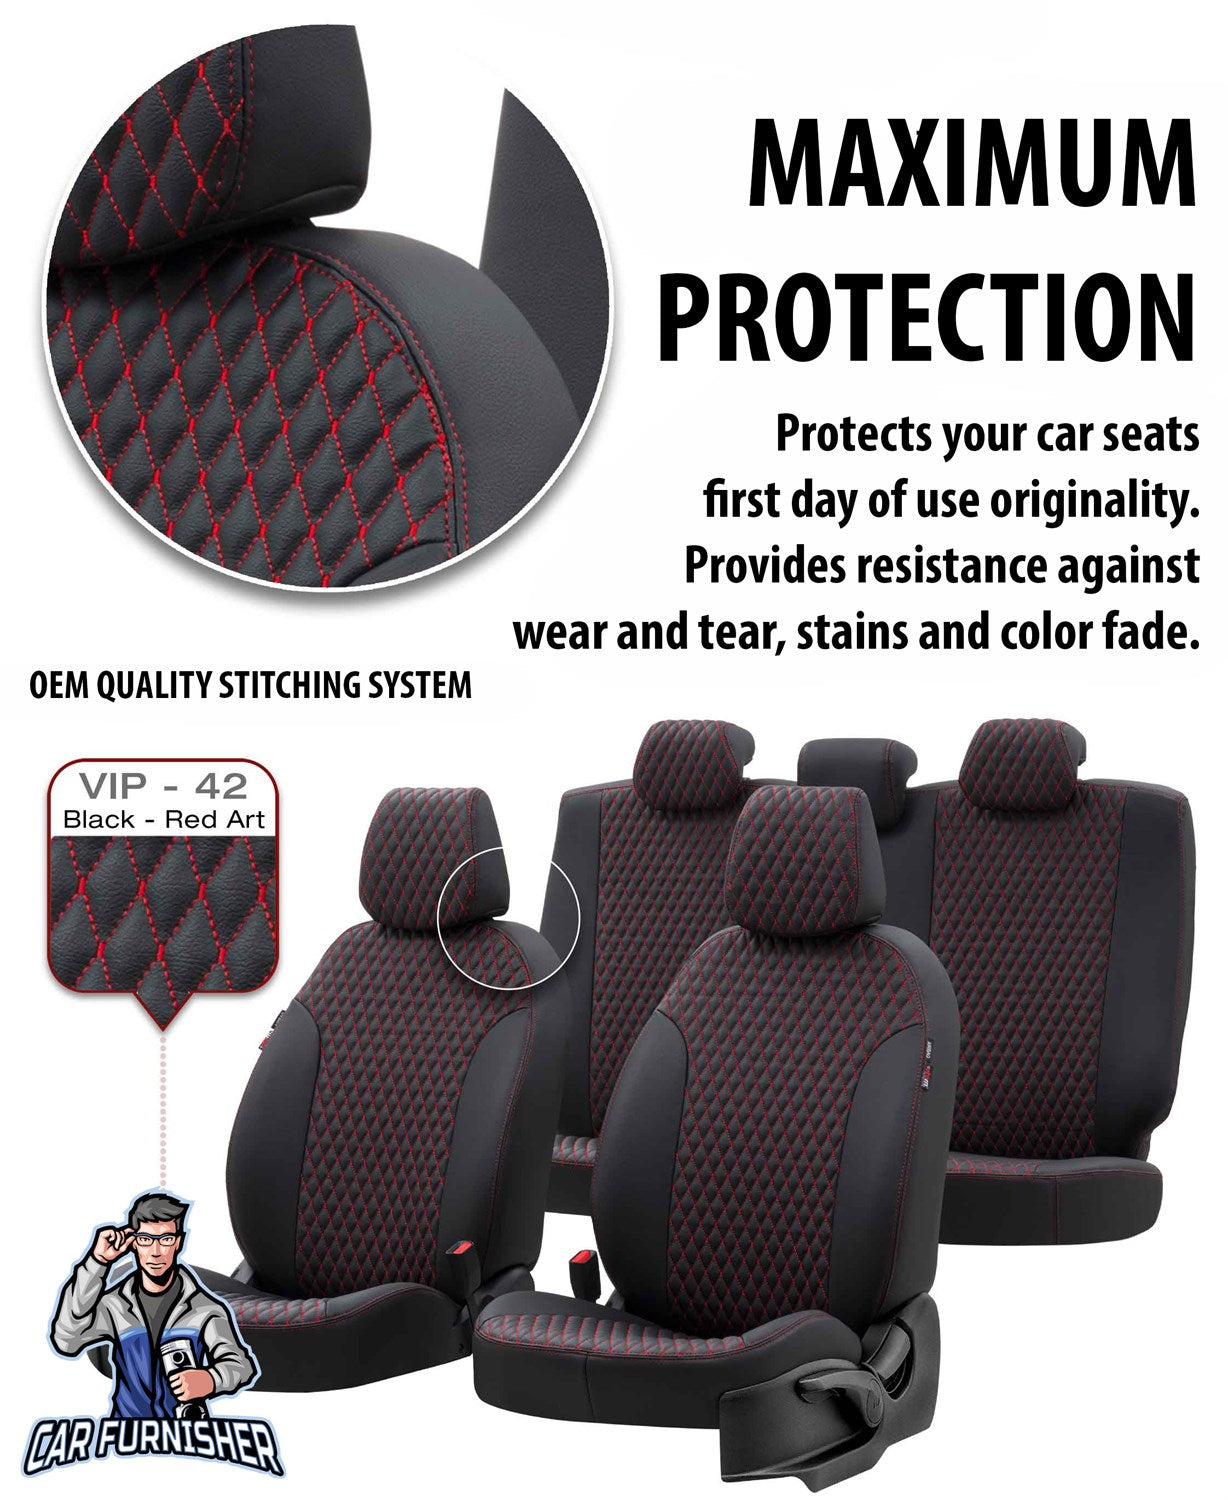 Honda CRV Seat Covers Amsterdam Leather Design Smoked Black Leather